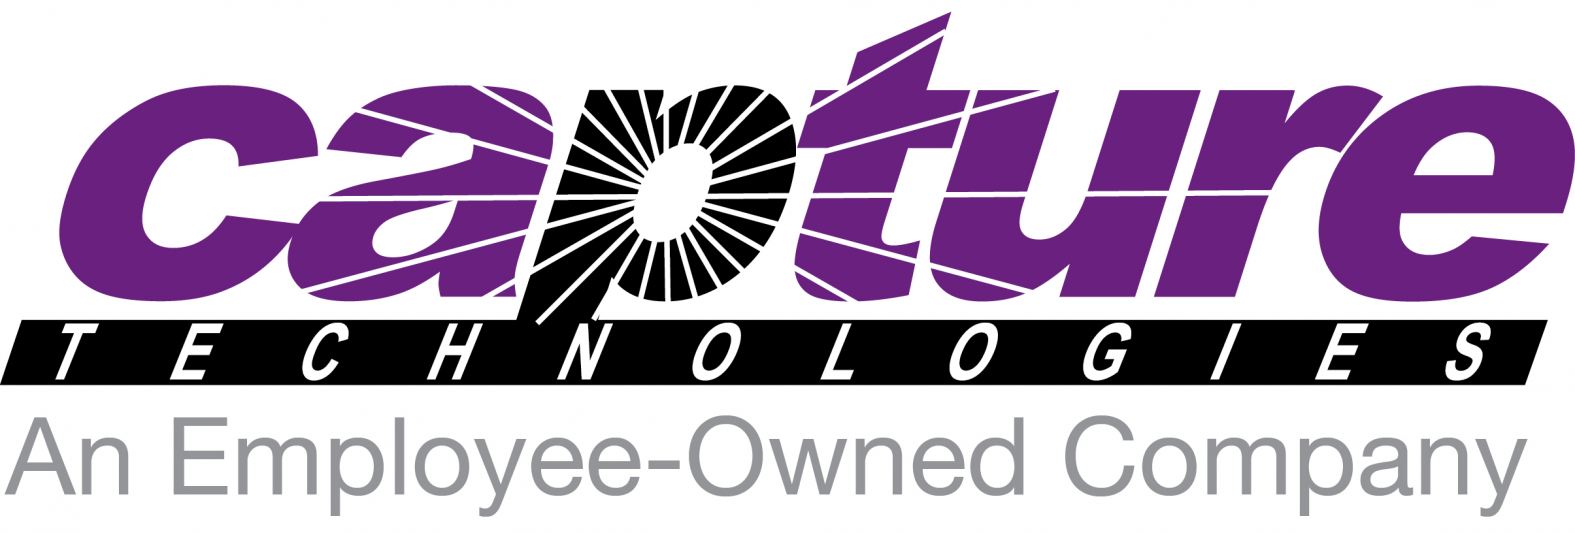 capturetech Logo